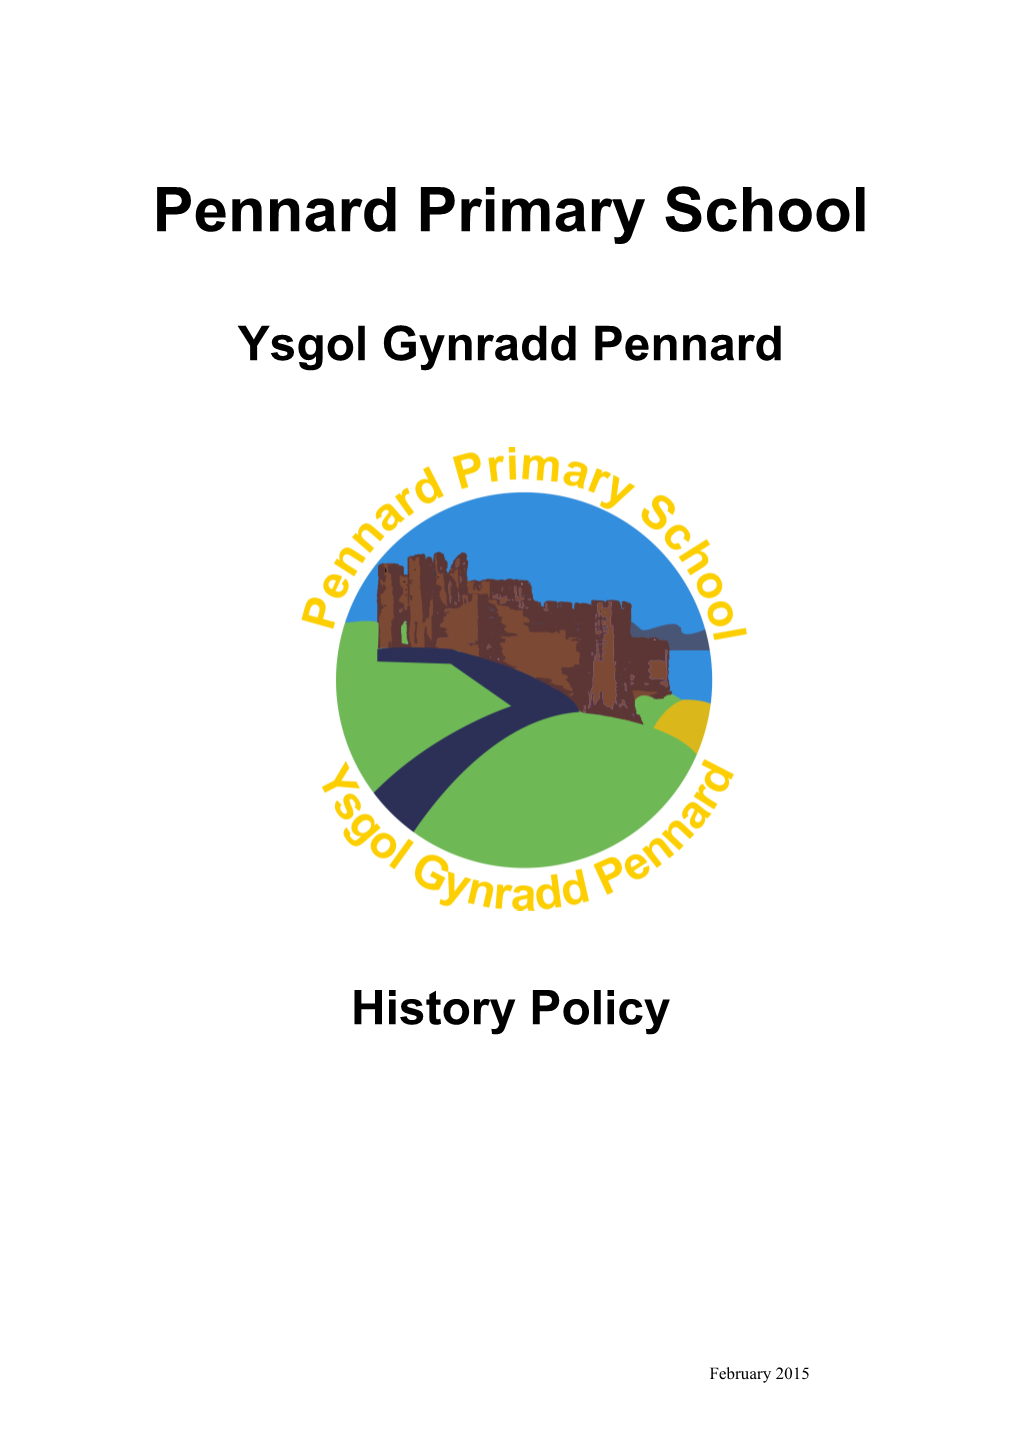 Pennardprimary School